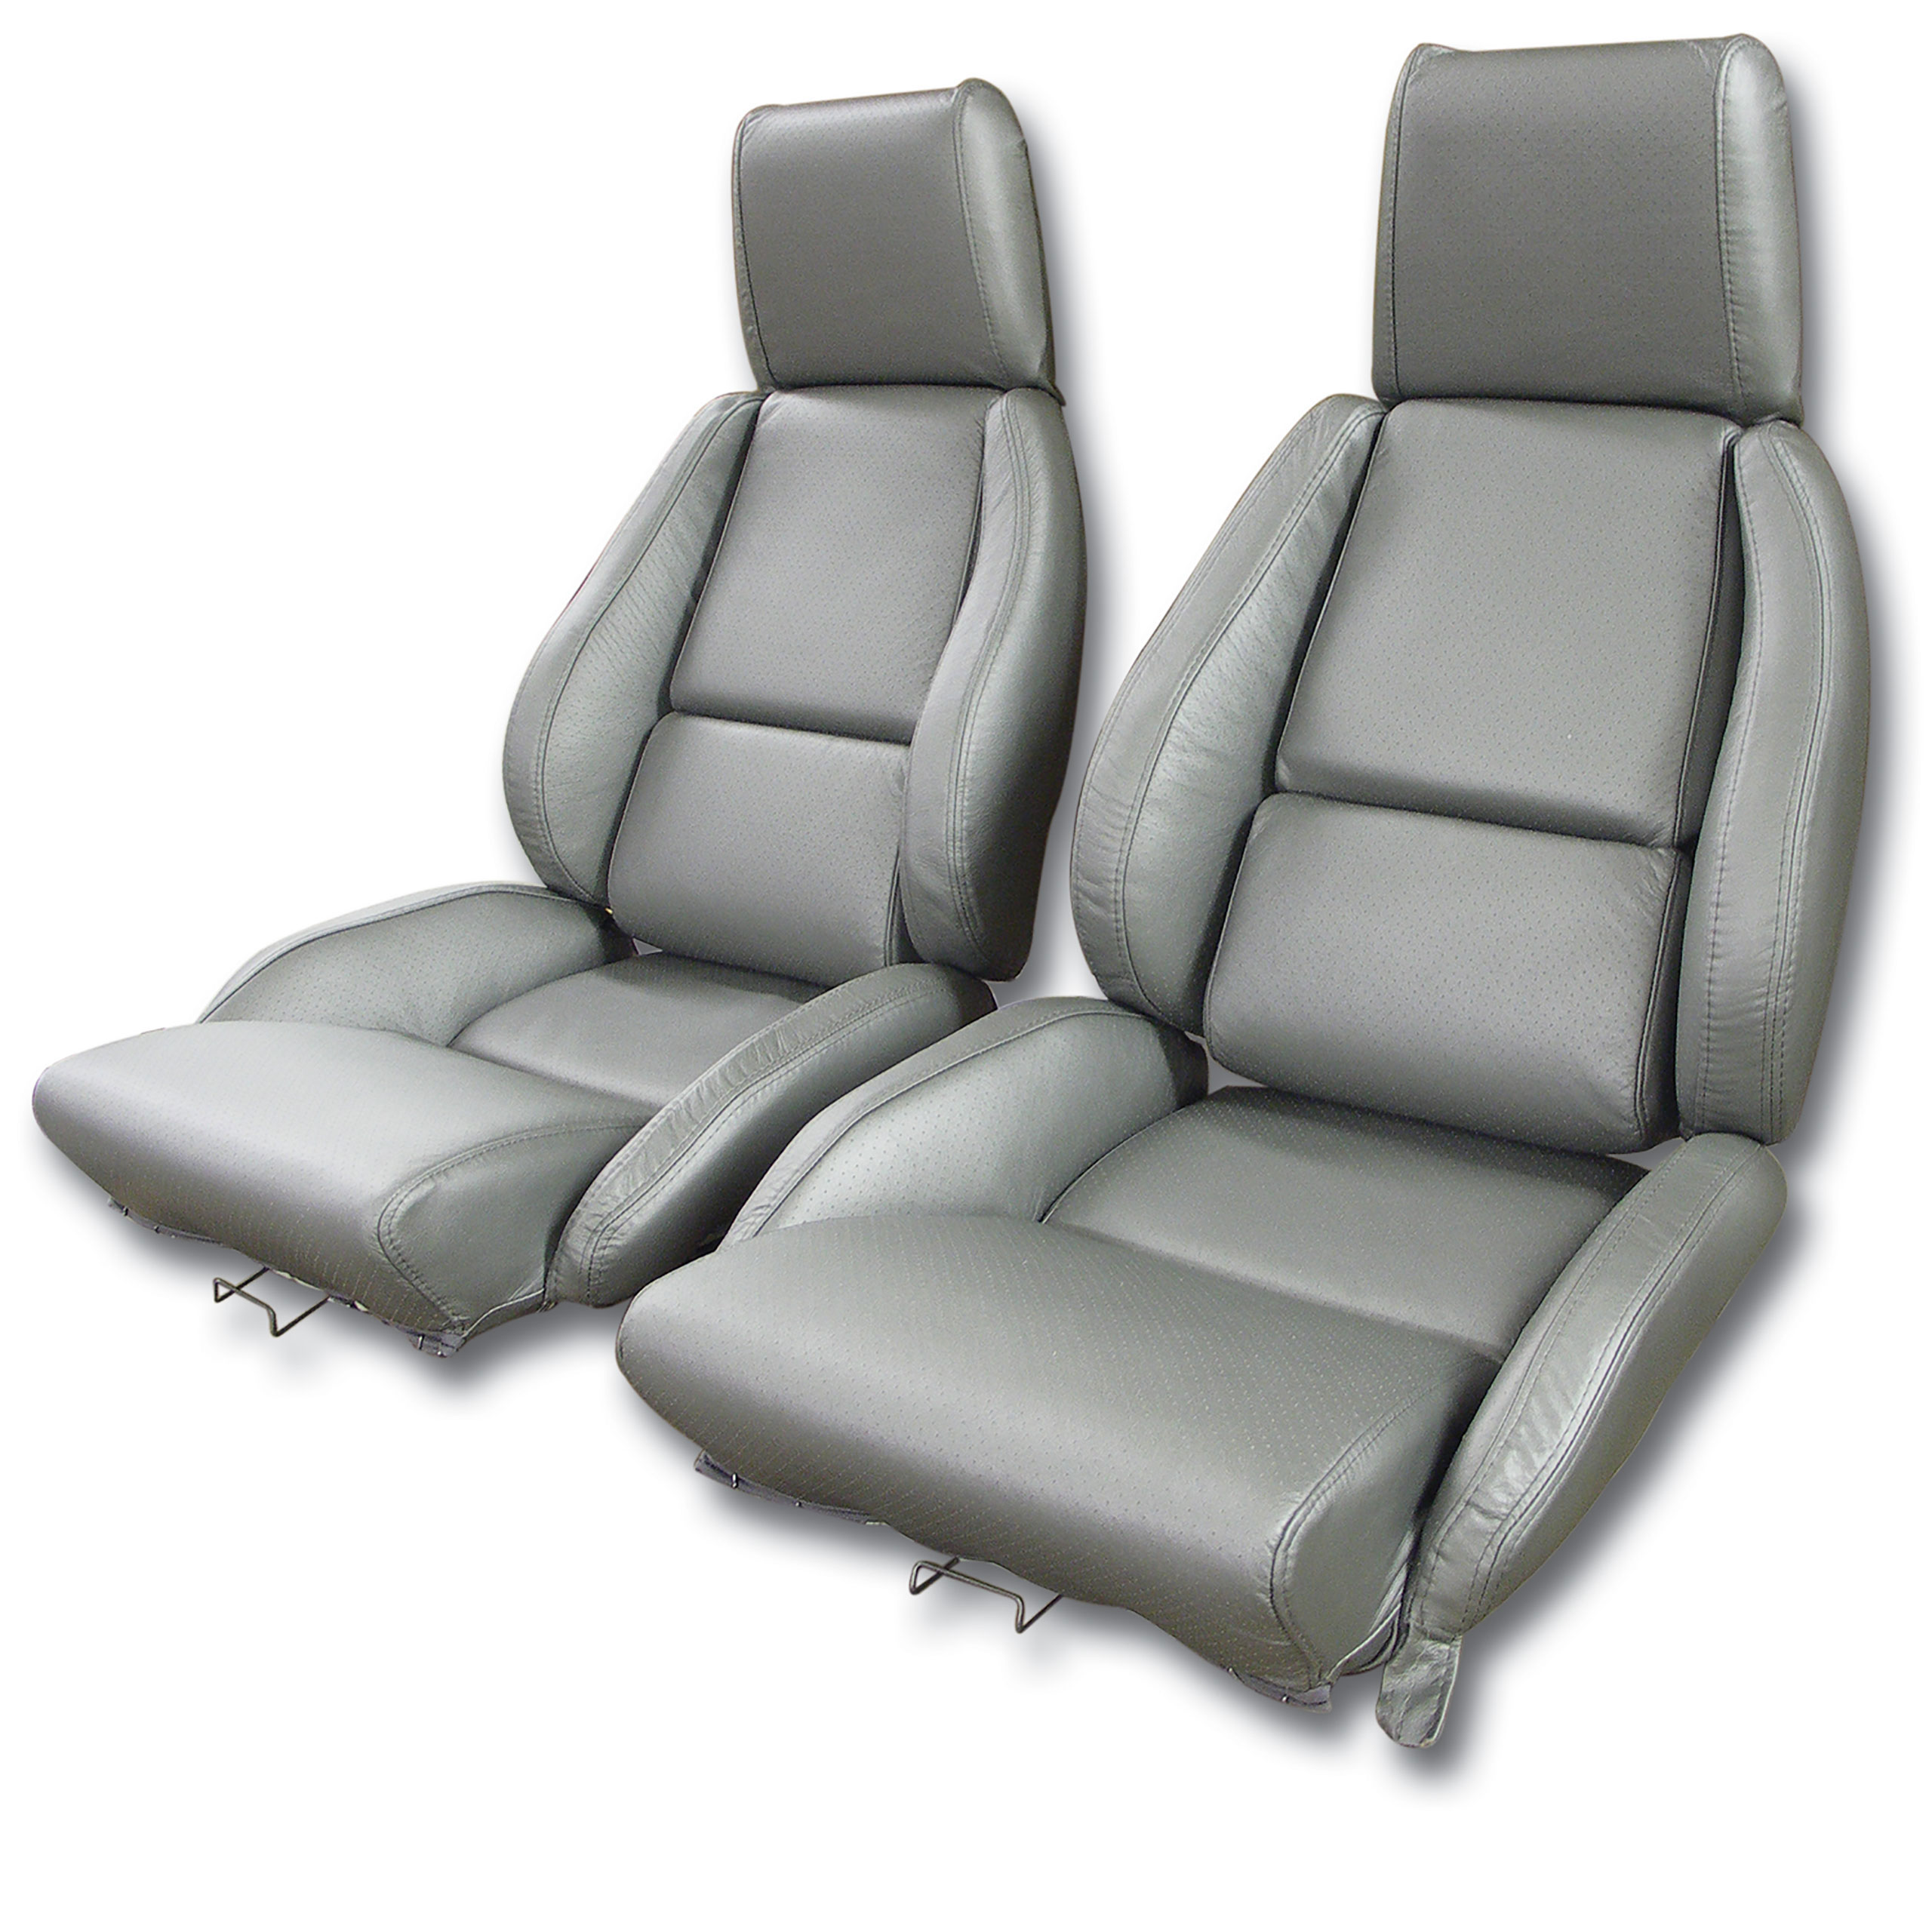 1984-1987 Corvette C4 Leather Seat Covers- Gray Standard CA-420369 